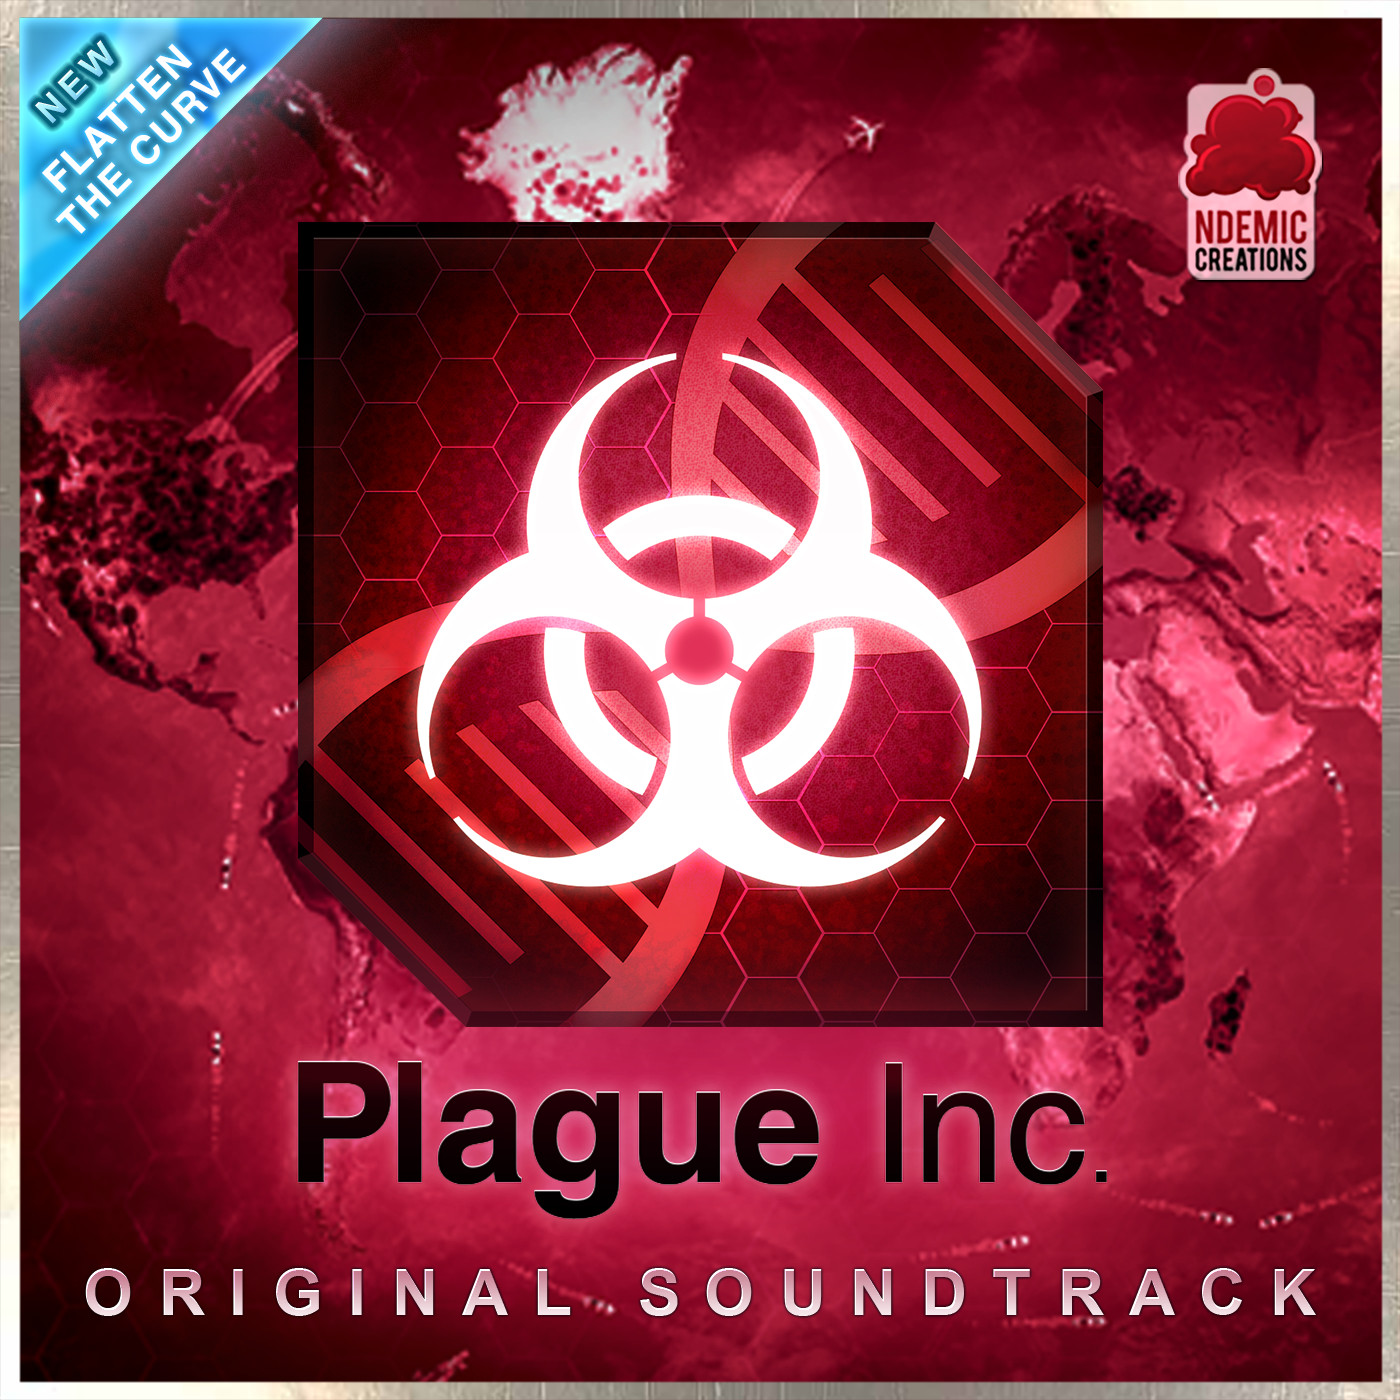 Премиум версия плагуе инк. Plague Inc. Ndemic Creations Plague Inc. Plague Inc игрушки. Playge Ink.